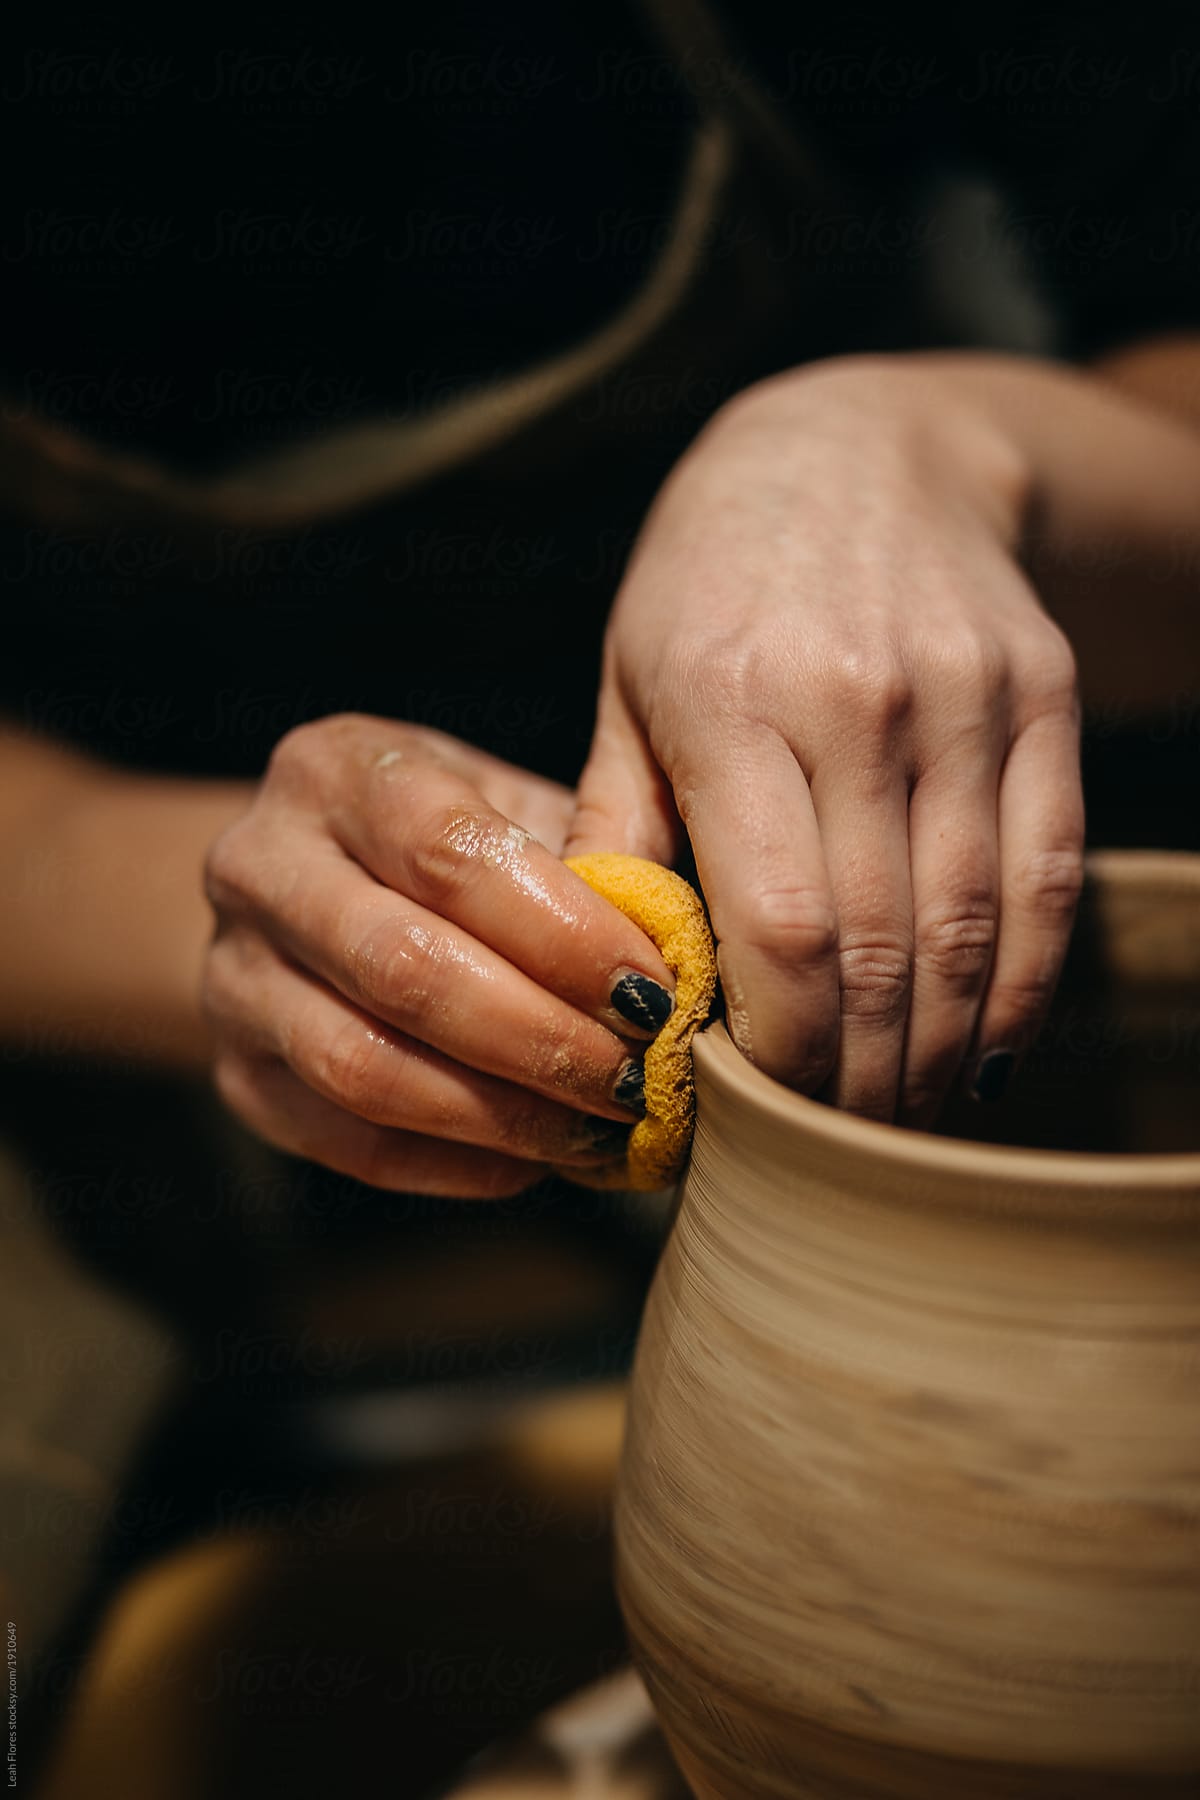 Potter Making Pots in Studio